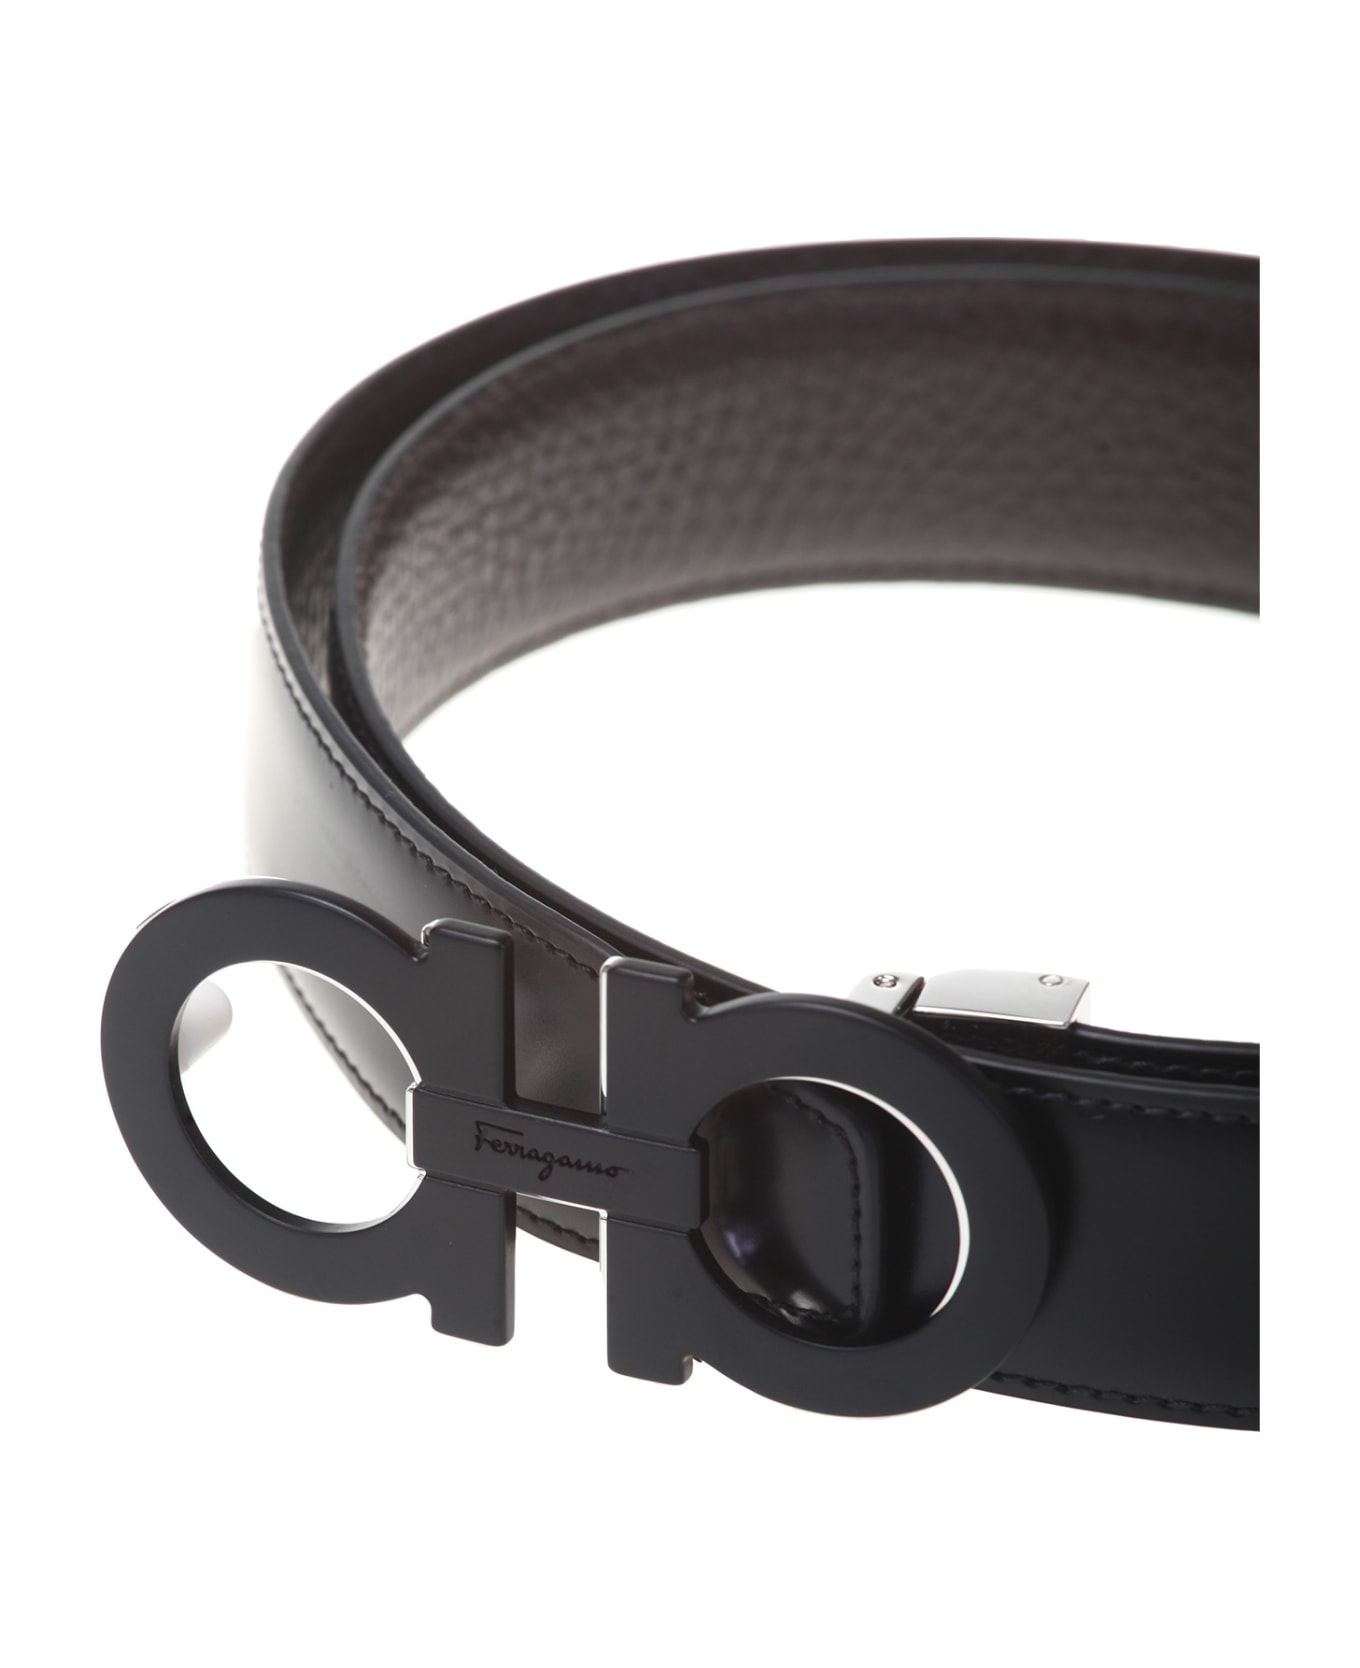 Ferragamo Salvatore  Gancini reversible and adjustable belt - Bicolore